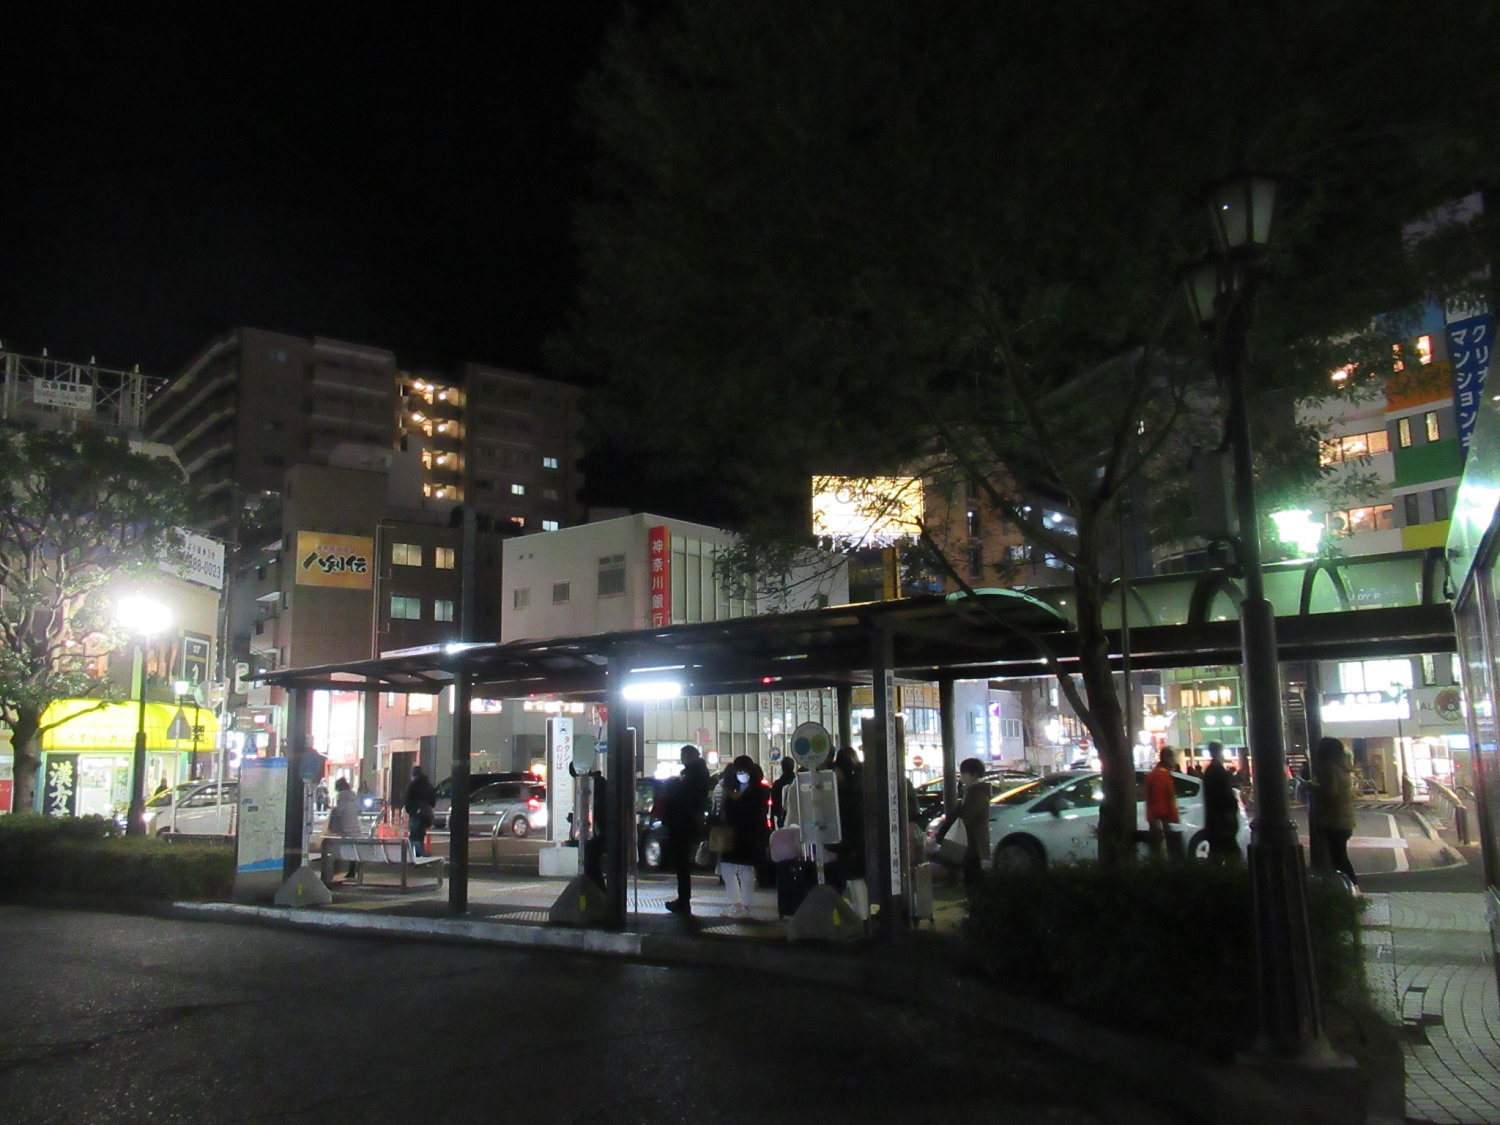 South entrance of Chigasaki Station